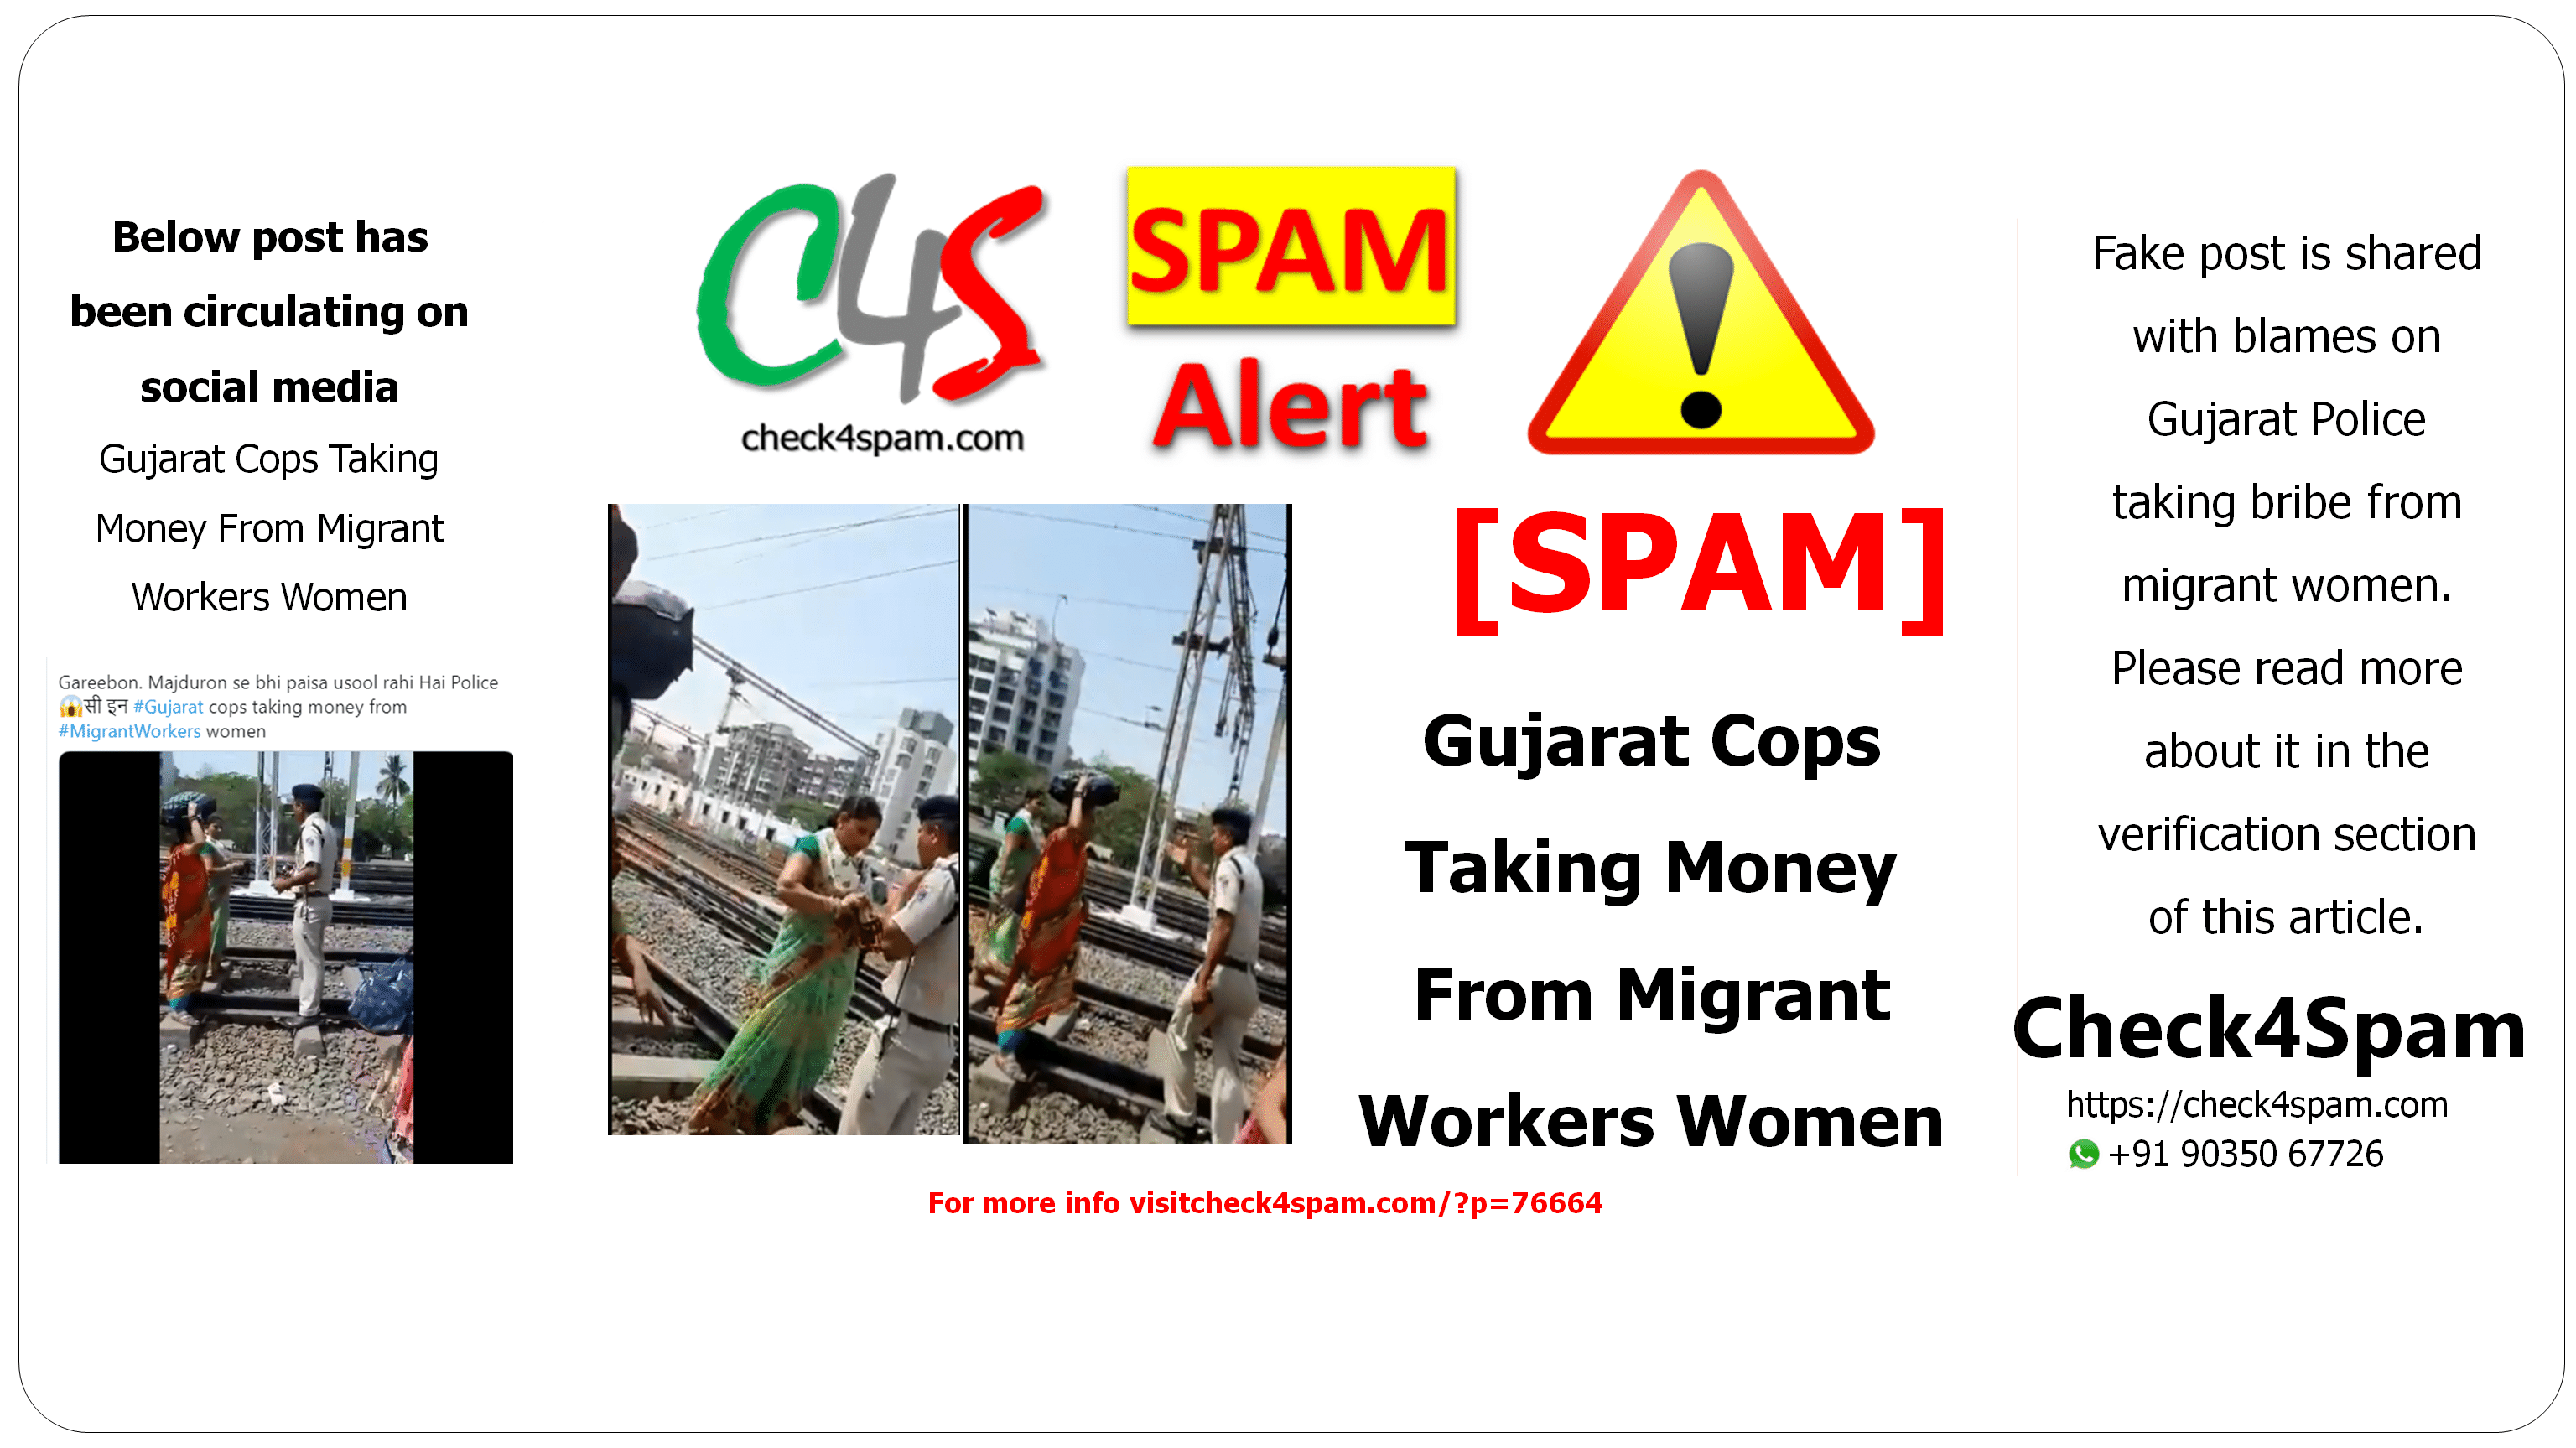 Gujarat Cops Taking Money From Migrant Workers Women